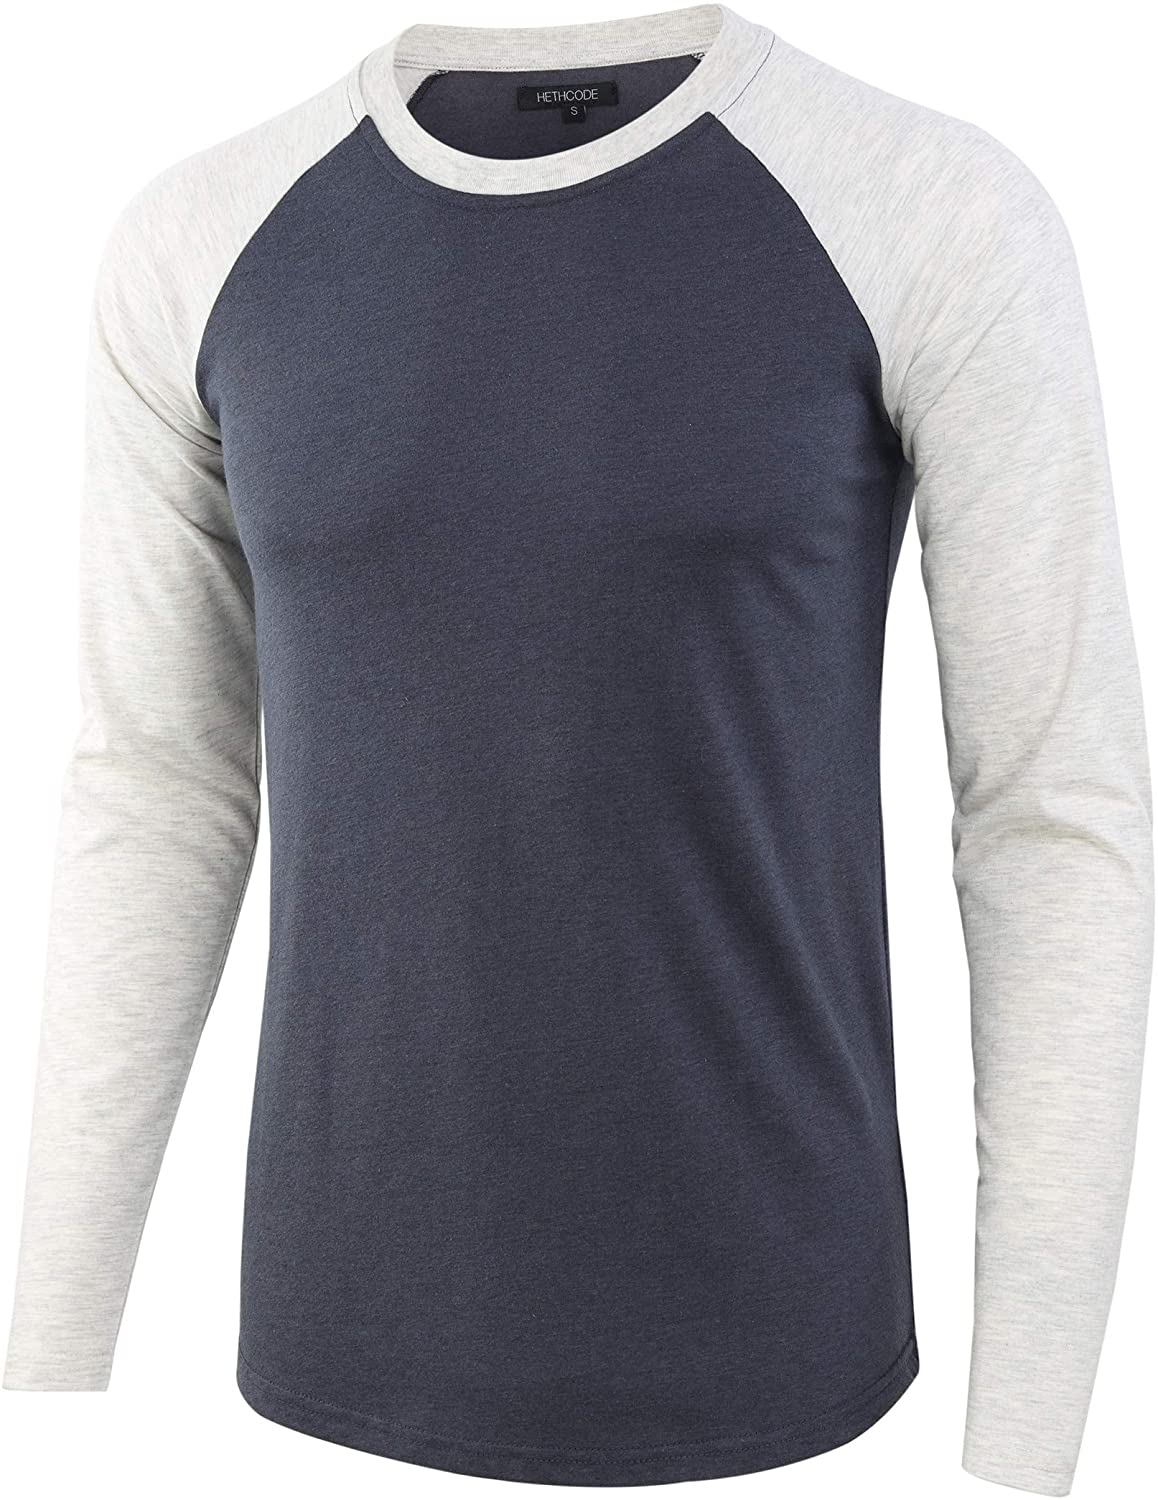 HETHCODE Men's Casual Basic Active Sports Vintage Long Sleeve Baseball T-Shirt 